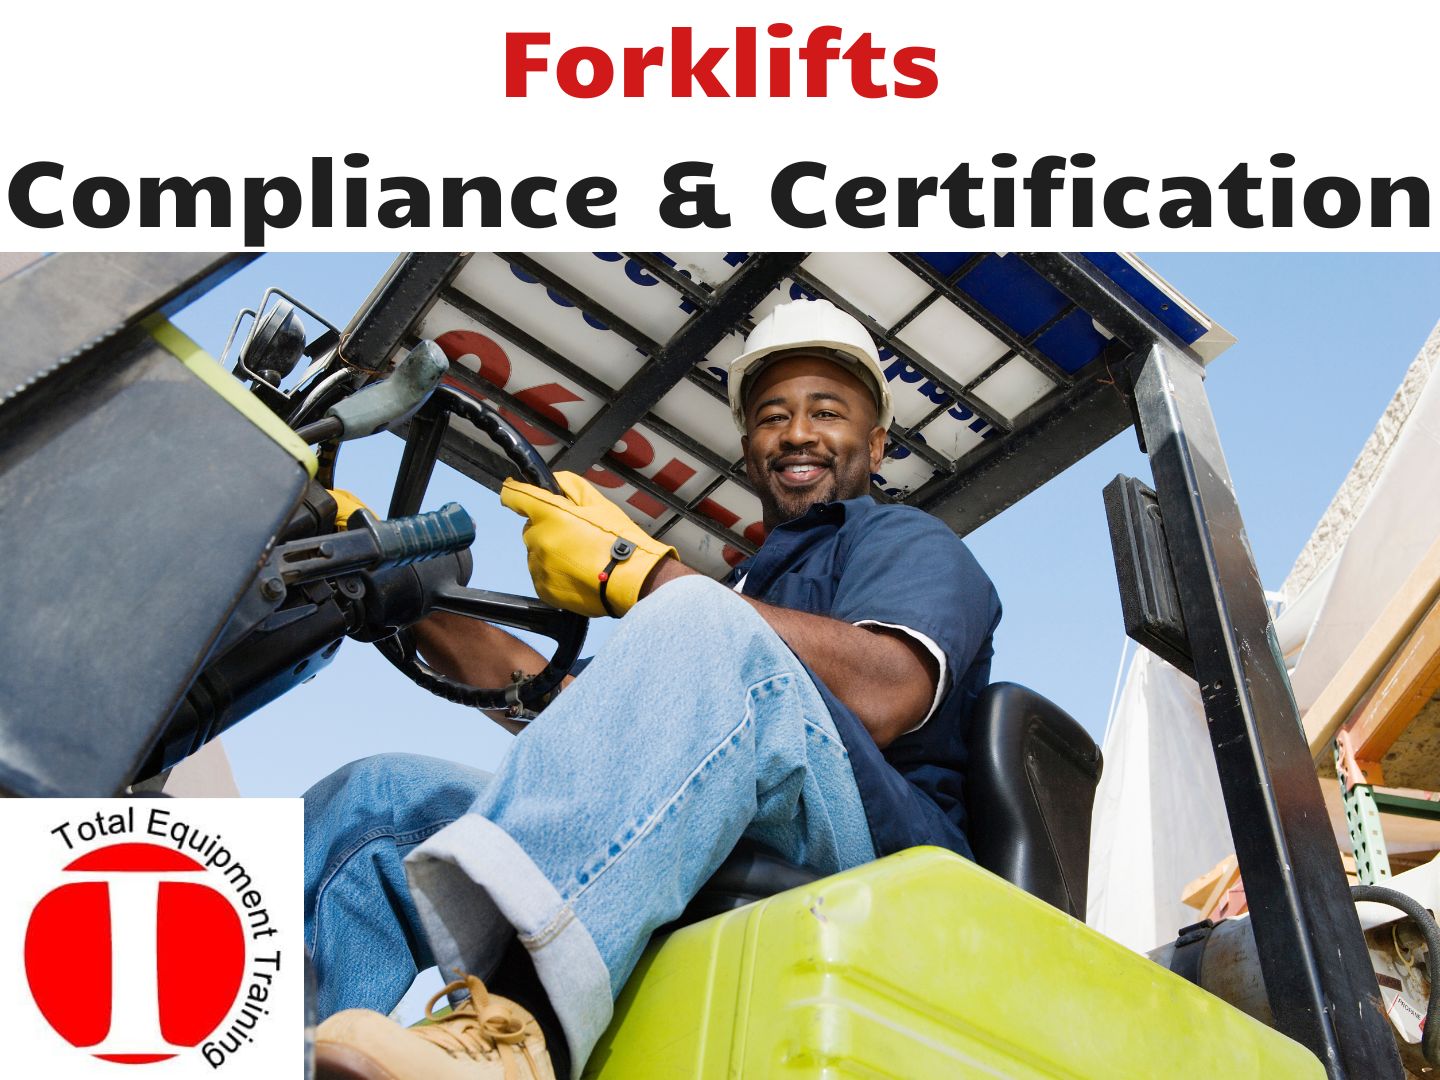 Forklift Certification and OSHA Forklift Compliance